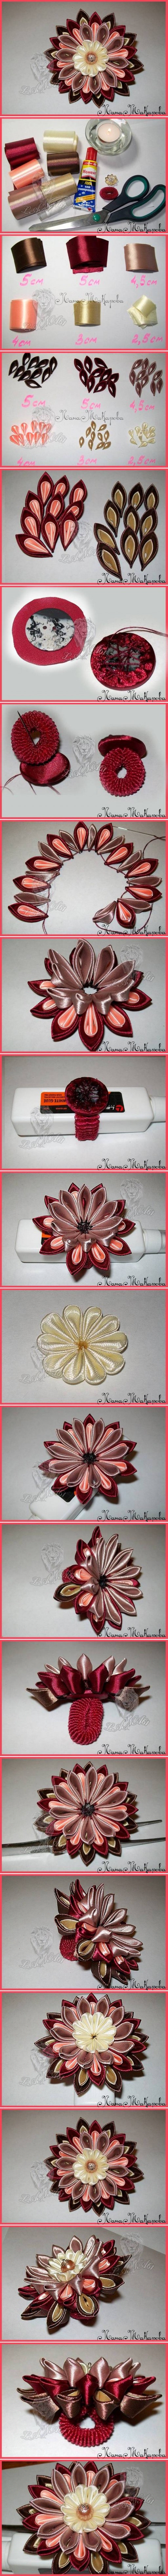 kanzashi ribbon flower tutorial